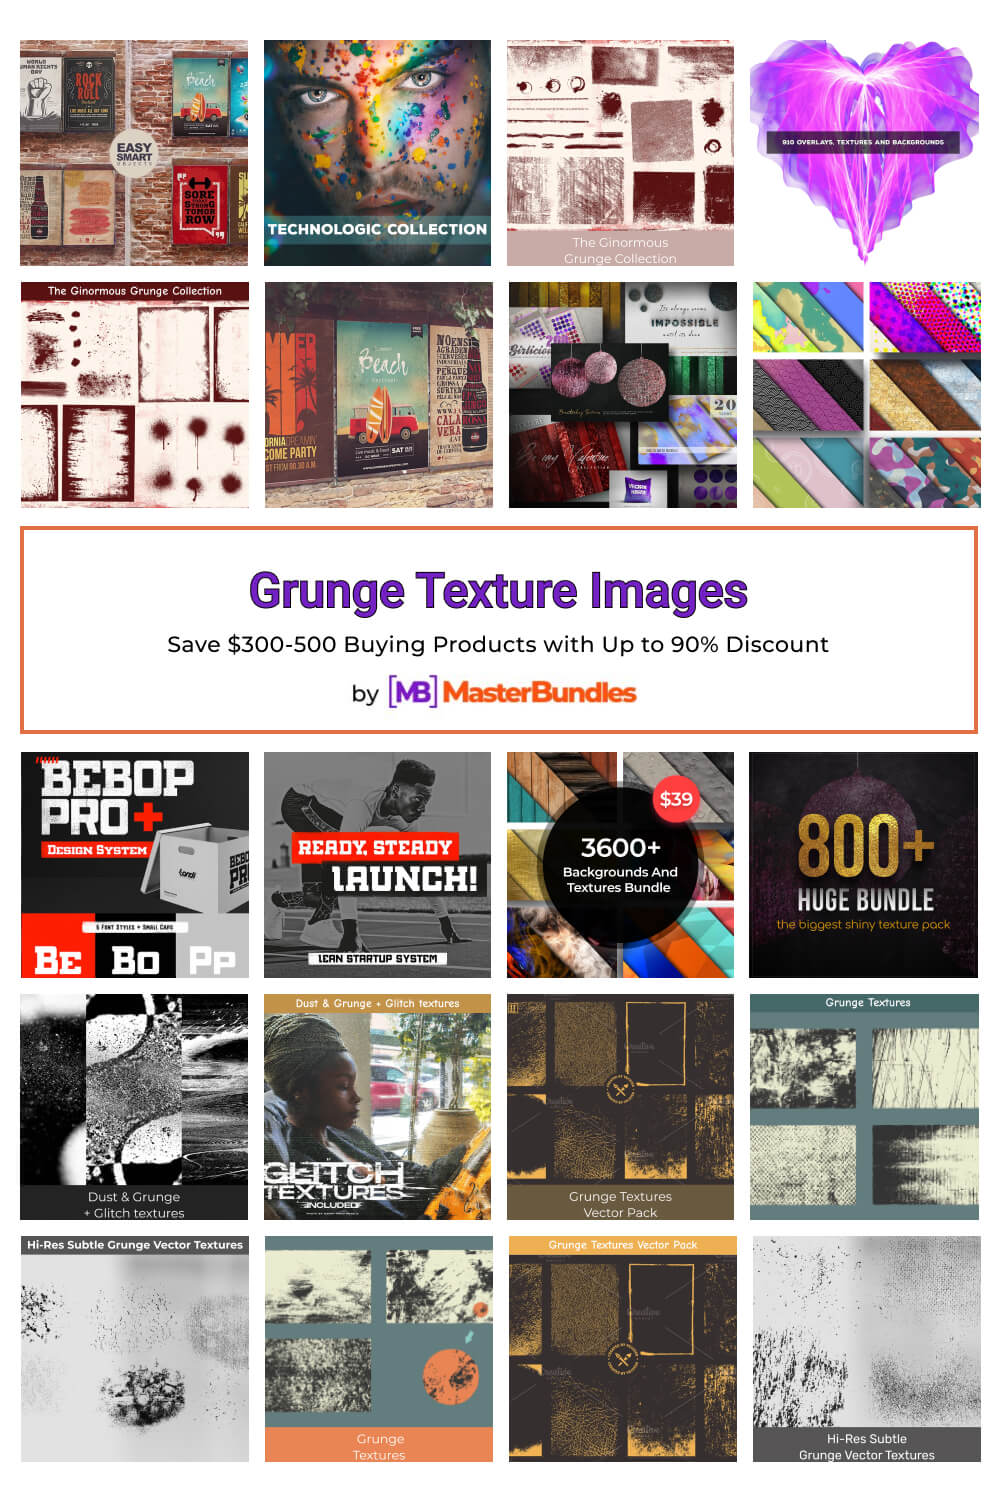 grunge texture images pinterest image.